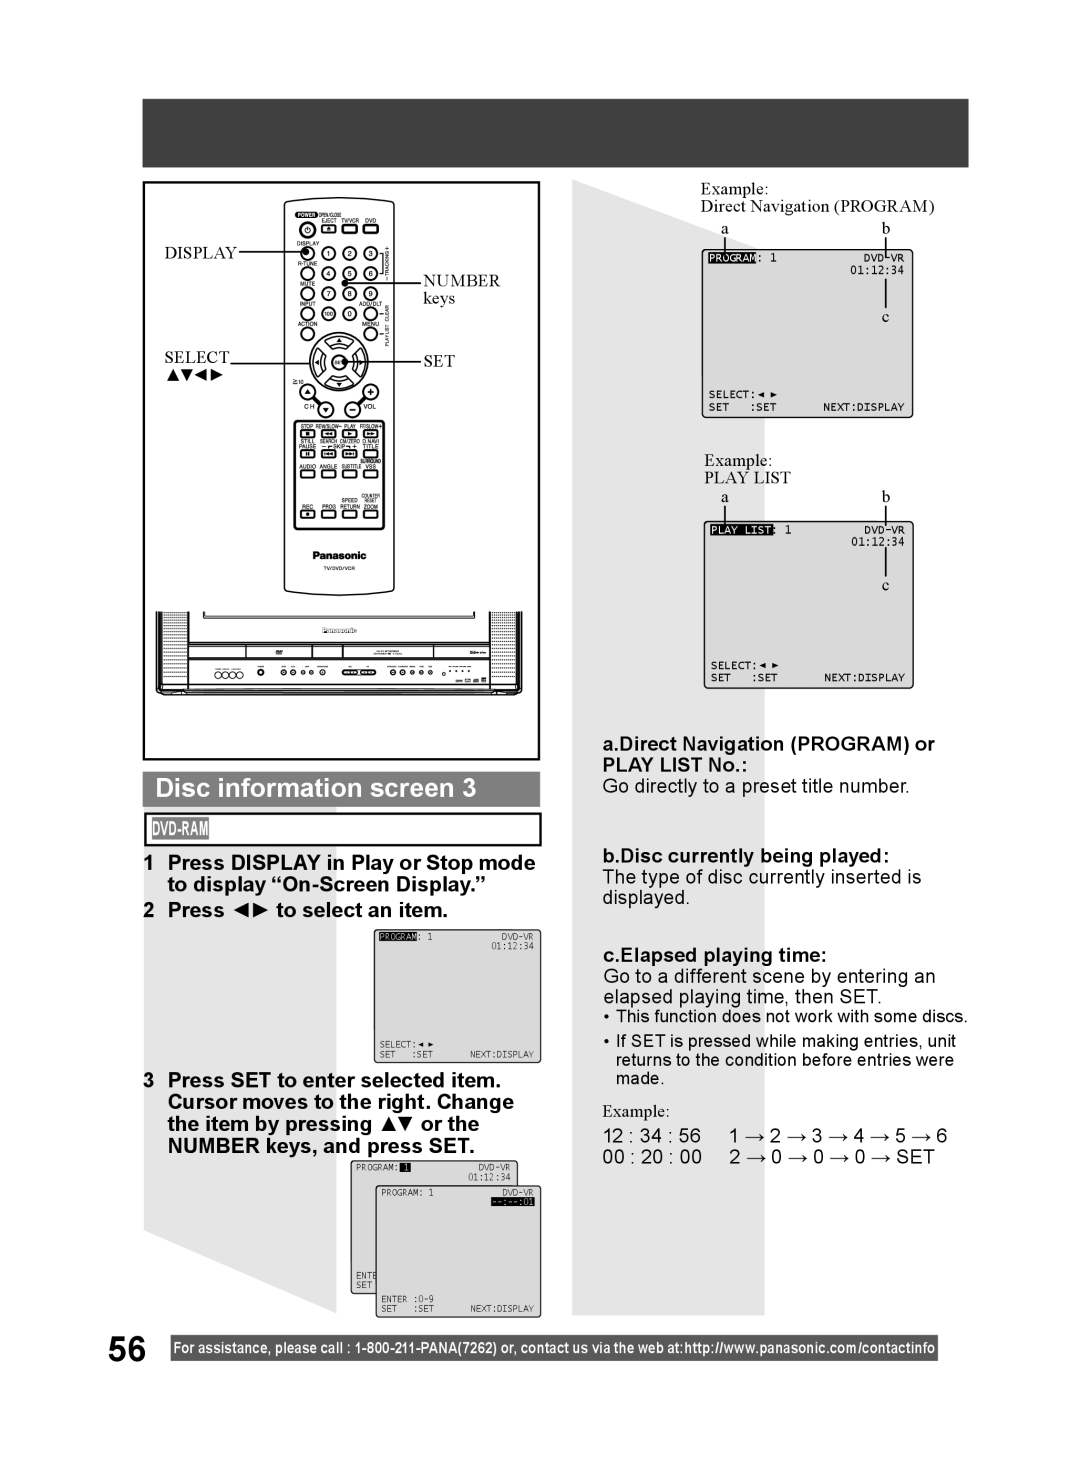 Panasonic PV DF2004 Disc information screen, Press to select an item, Dvd-Ram, a.Direct Navigation PROGRAM or PLAY LIST No 